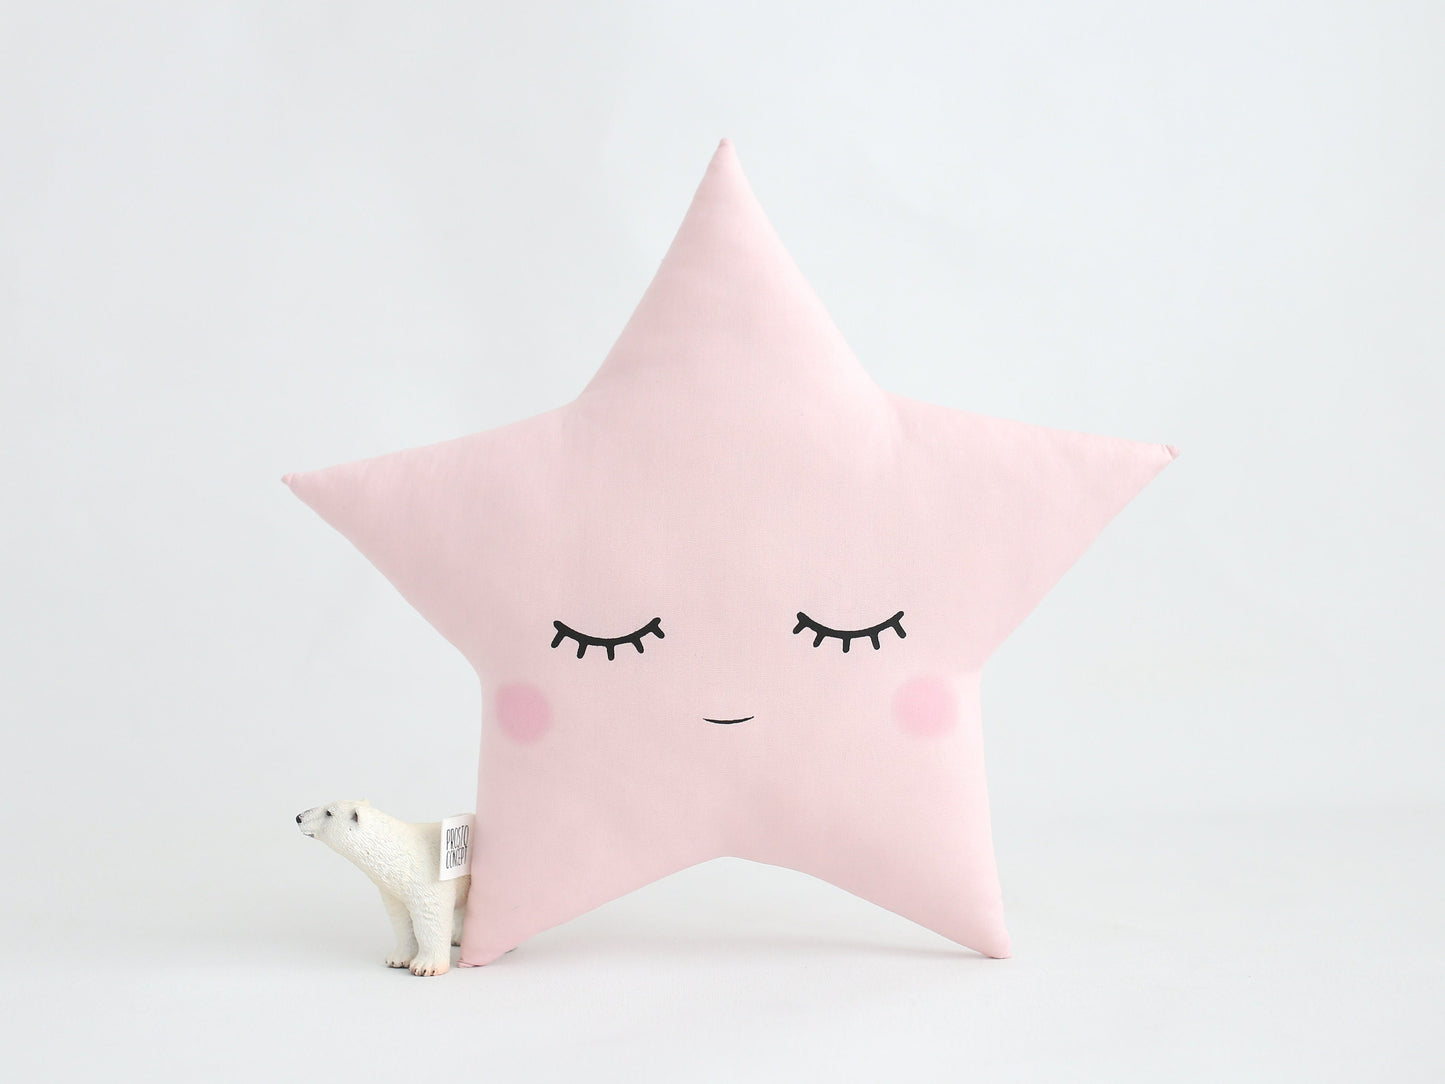 Set of 2 Pillows - Light Gray Cloud Pillow and Pale Pink Star Pillow